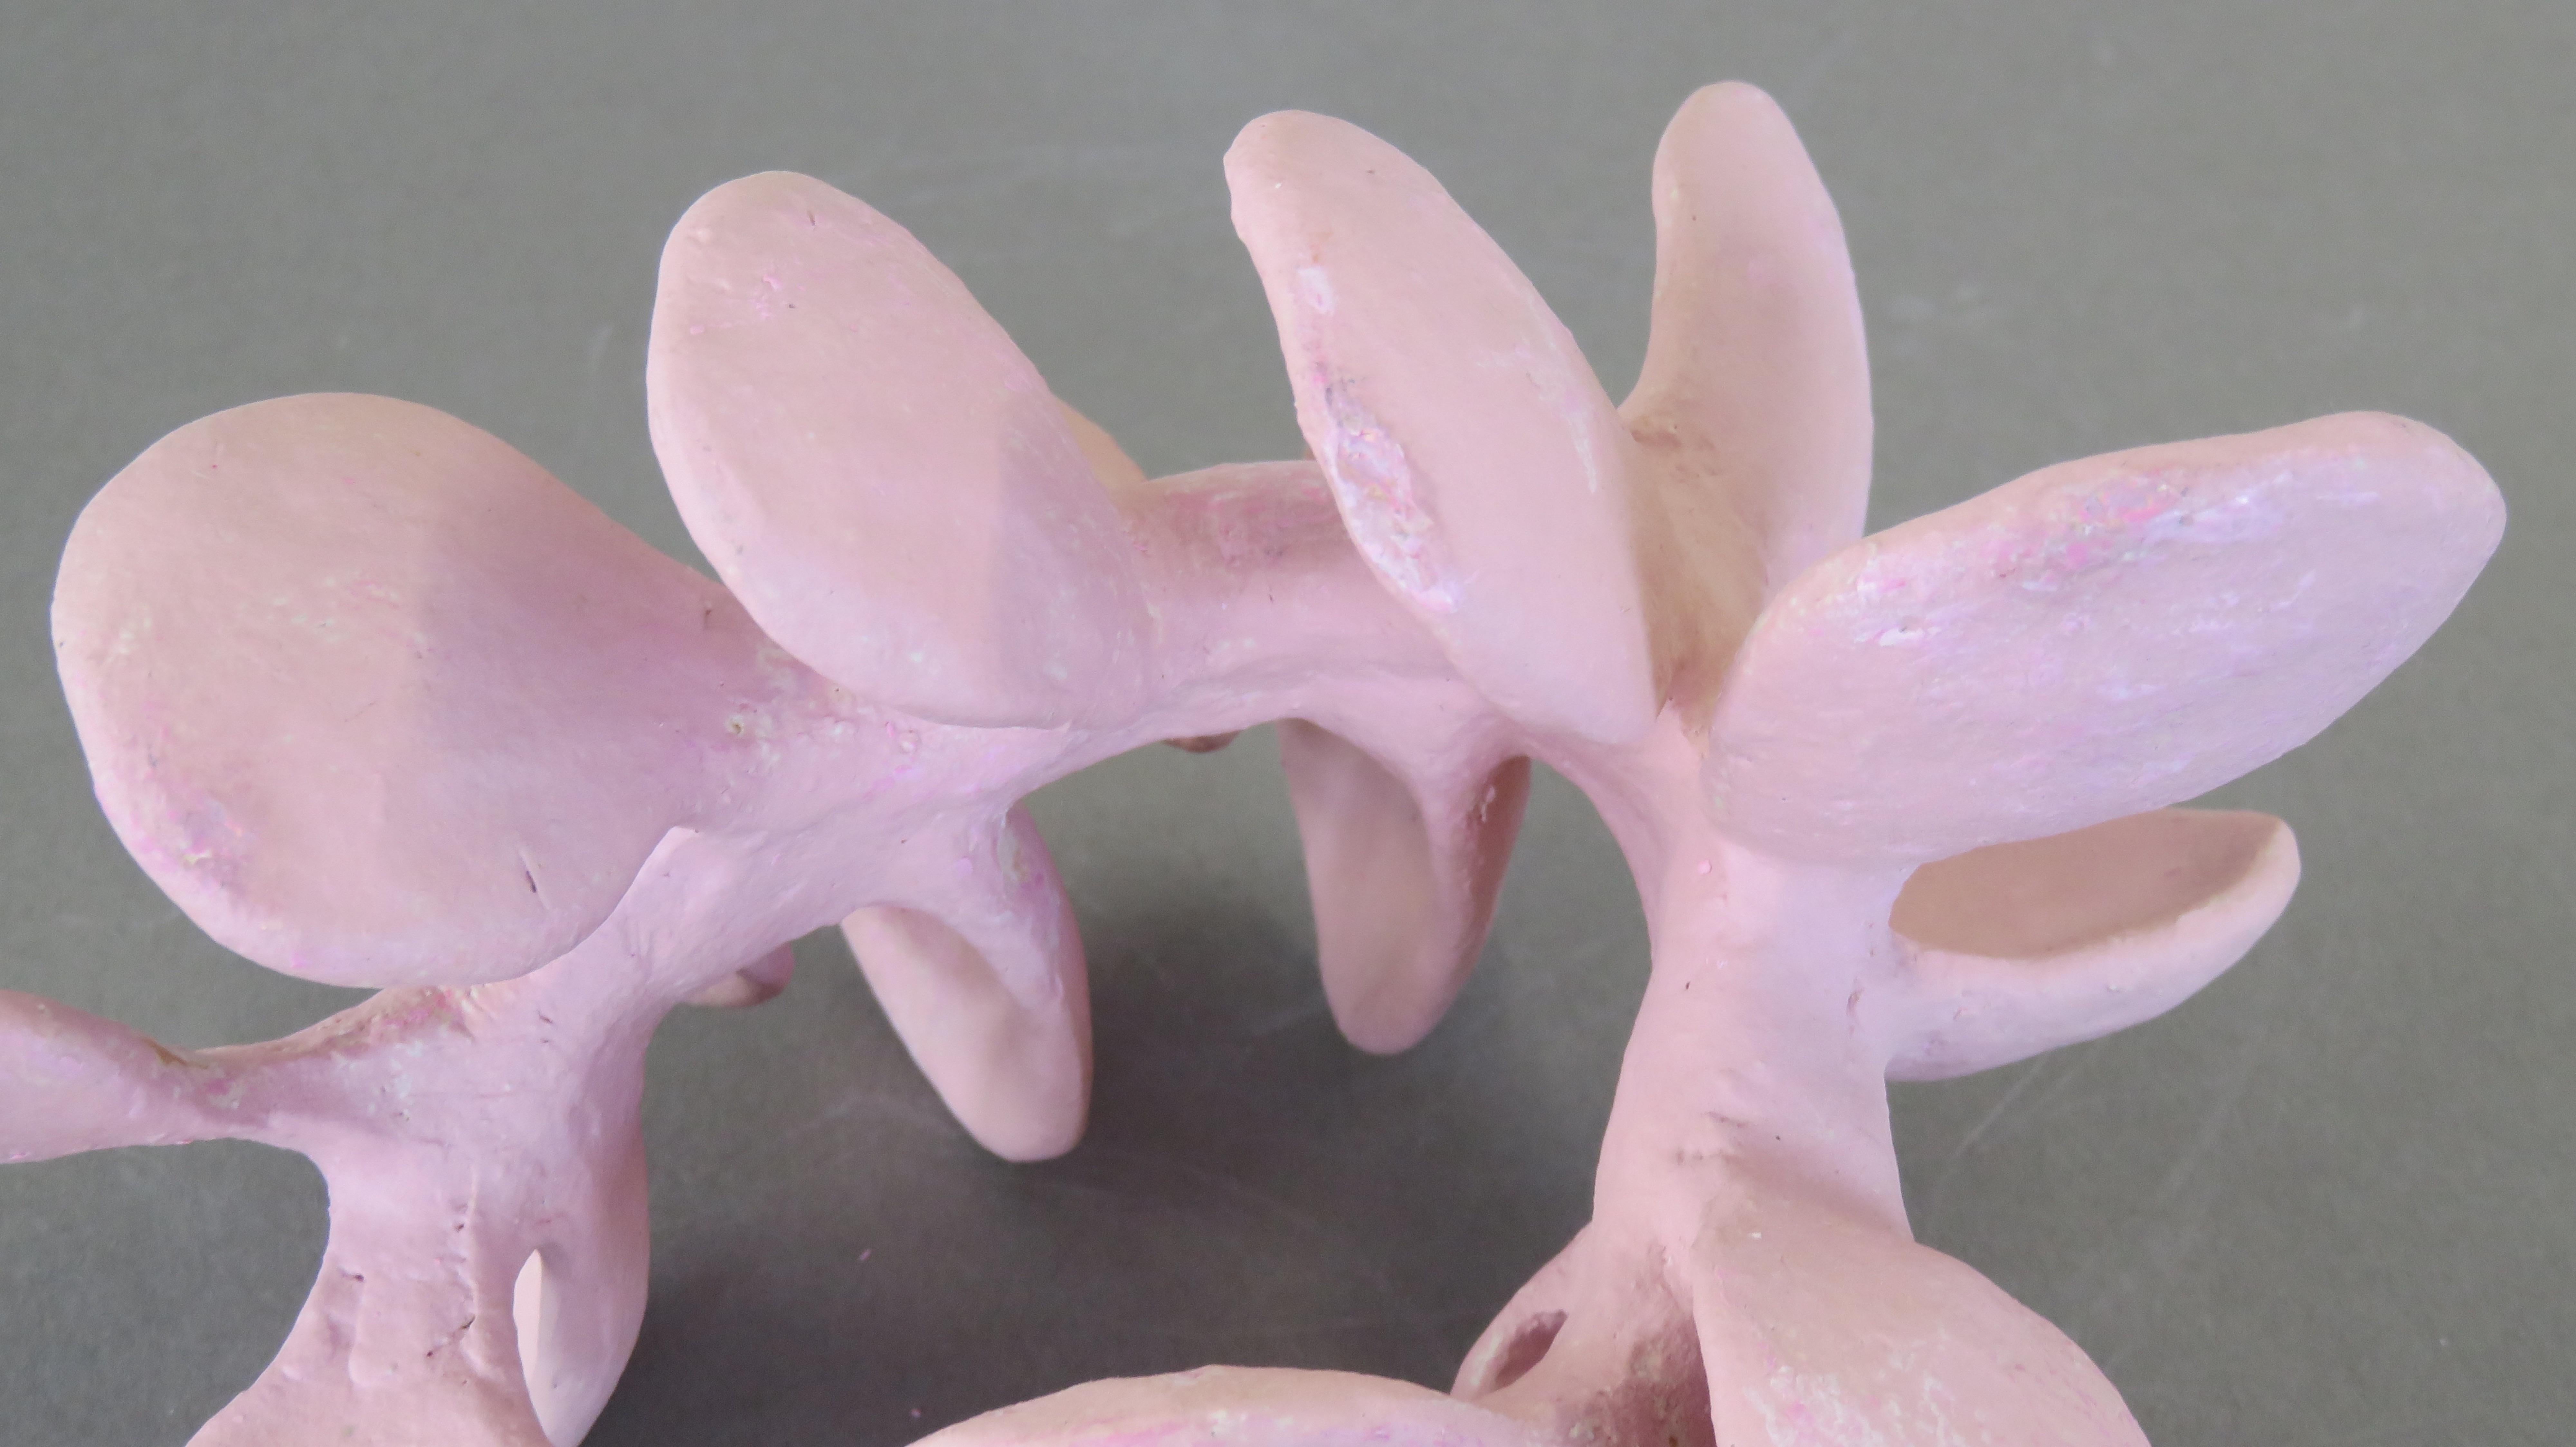 Handbuilt Ceramic Sculpture in Pink, A Flower-Like Vertebrae With Petals 2